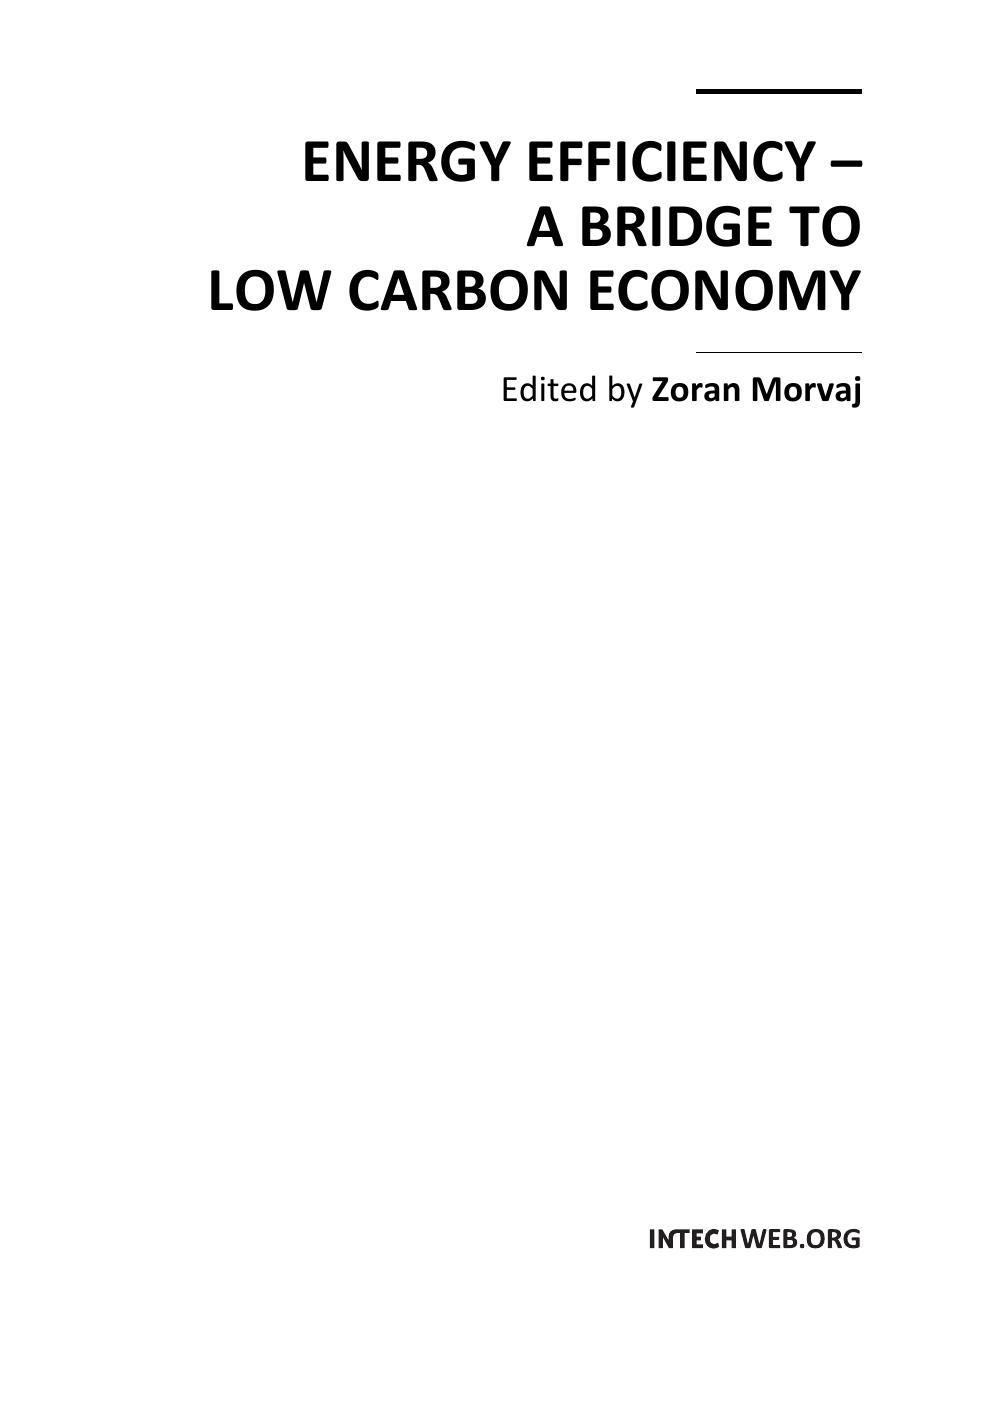 Energy Efficiency A Bridge to Low Carbon Economy 2012.pdf